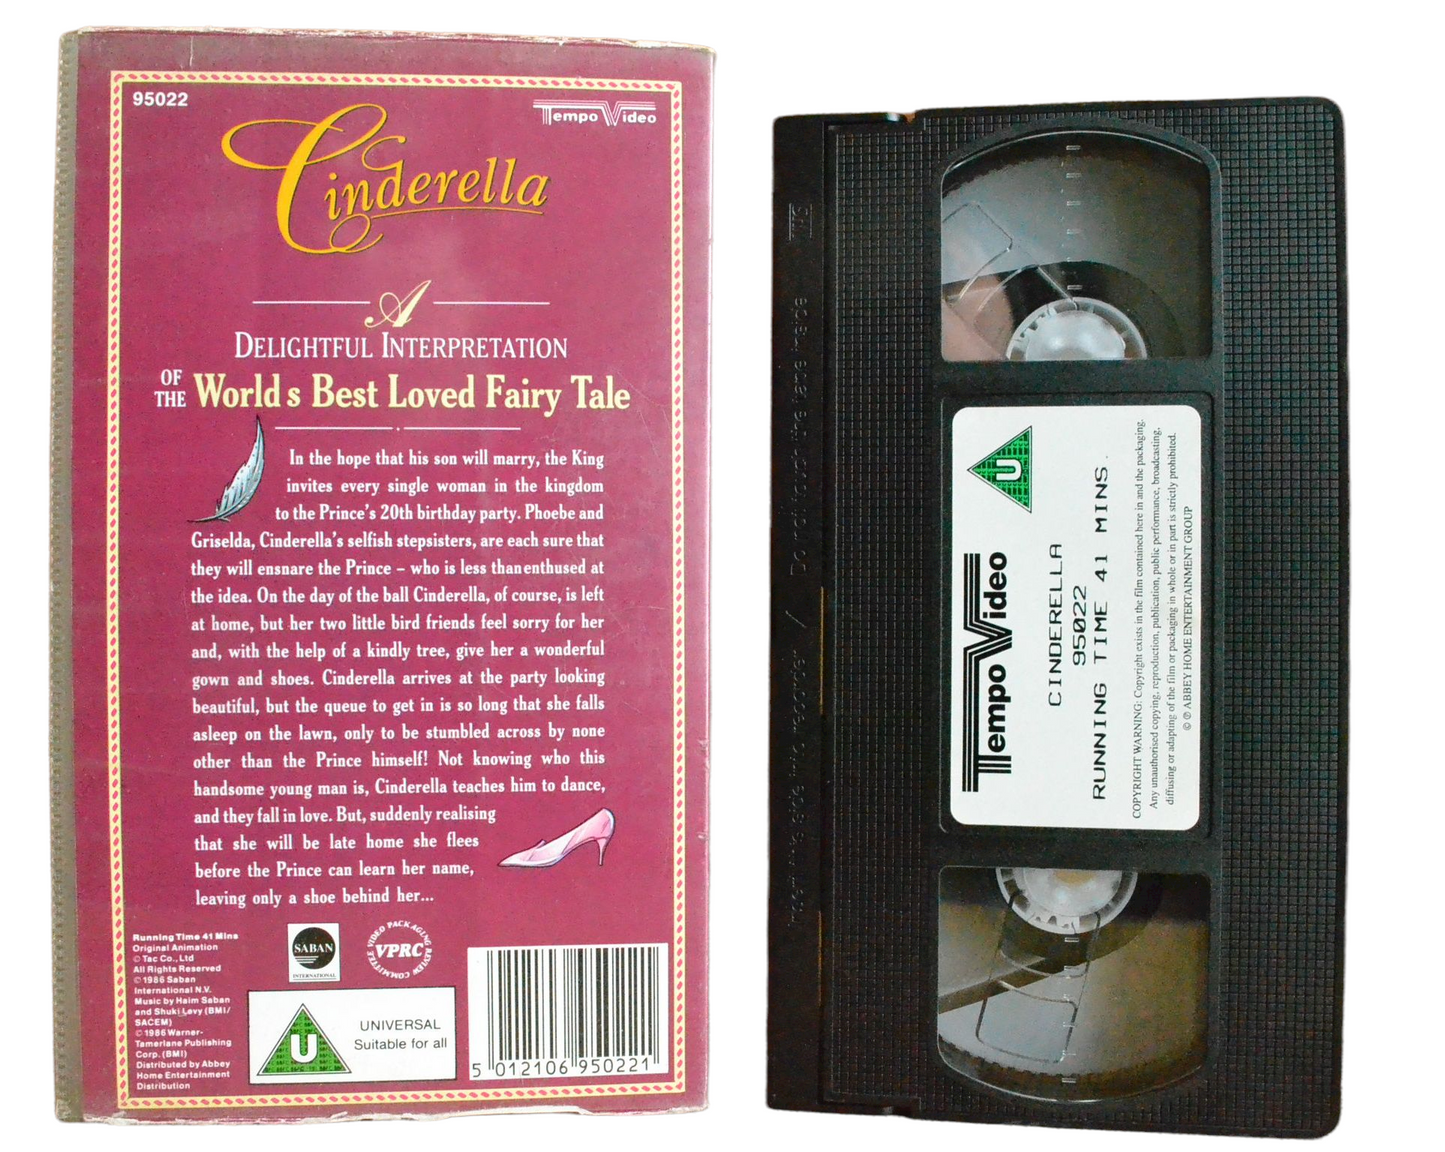 Cinderella - Tempo Video - Children’s - Pal VHS-